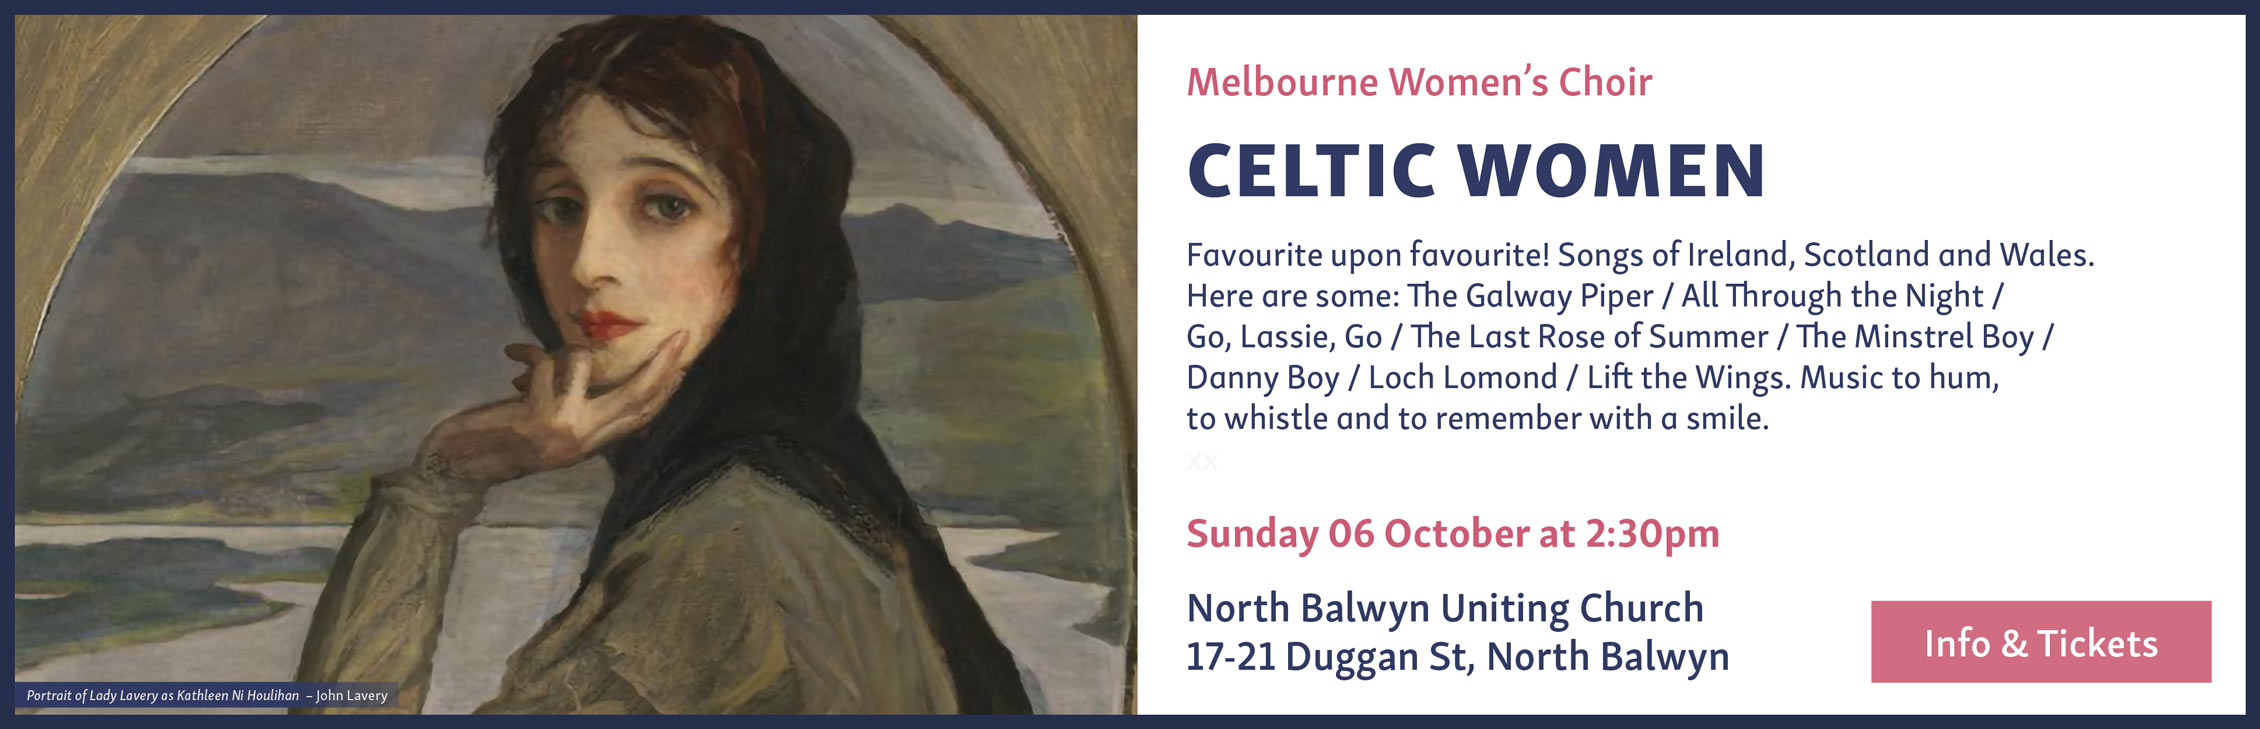 Celtic Women choral music concert